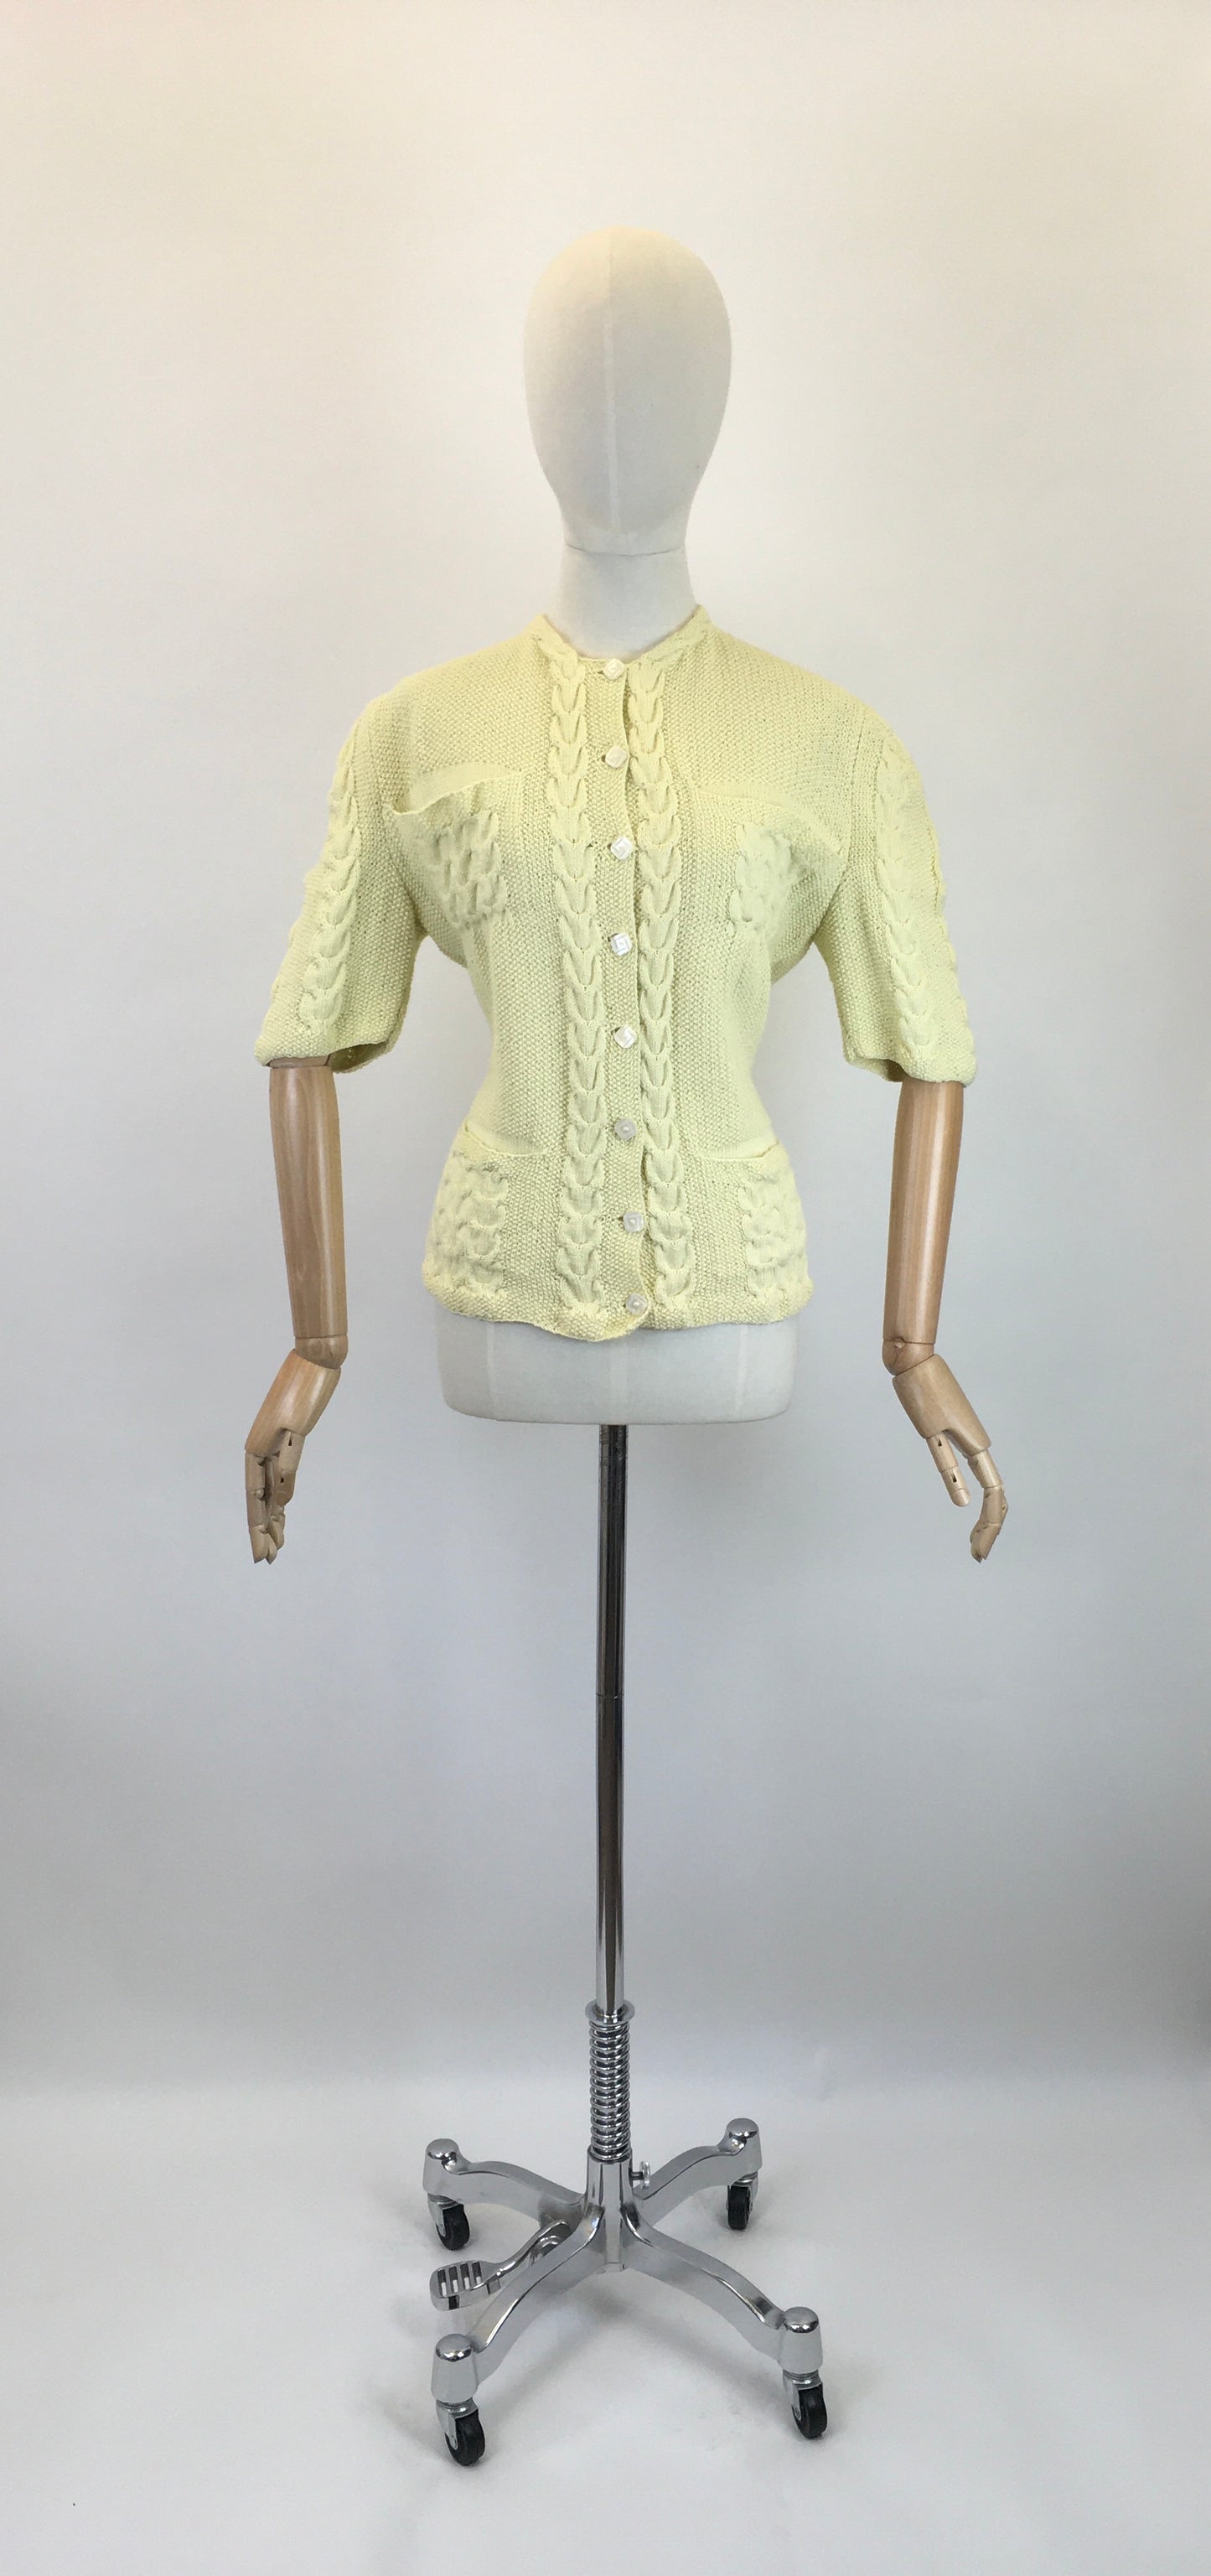 1940’s style Stunning Knitted Cardigan in Soft Lemon - Amazing Back Panel Detailing